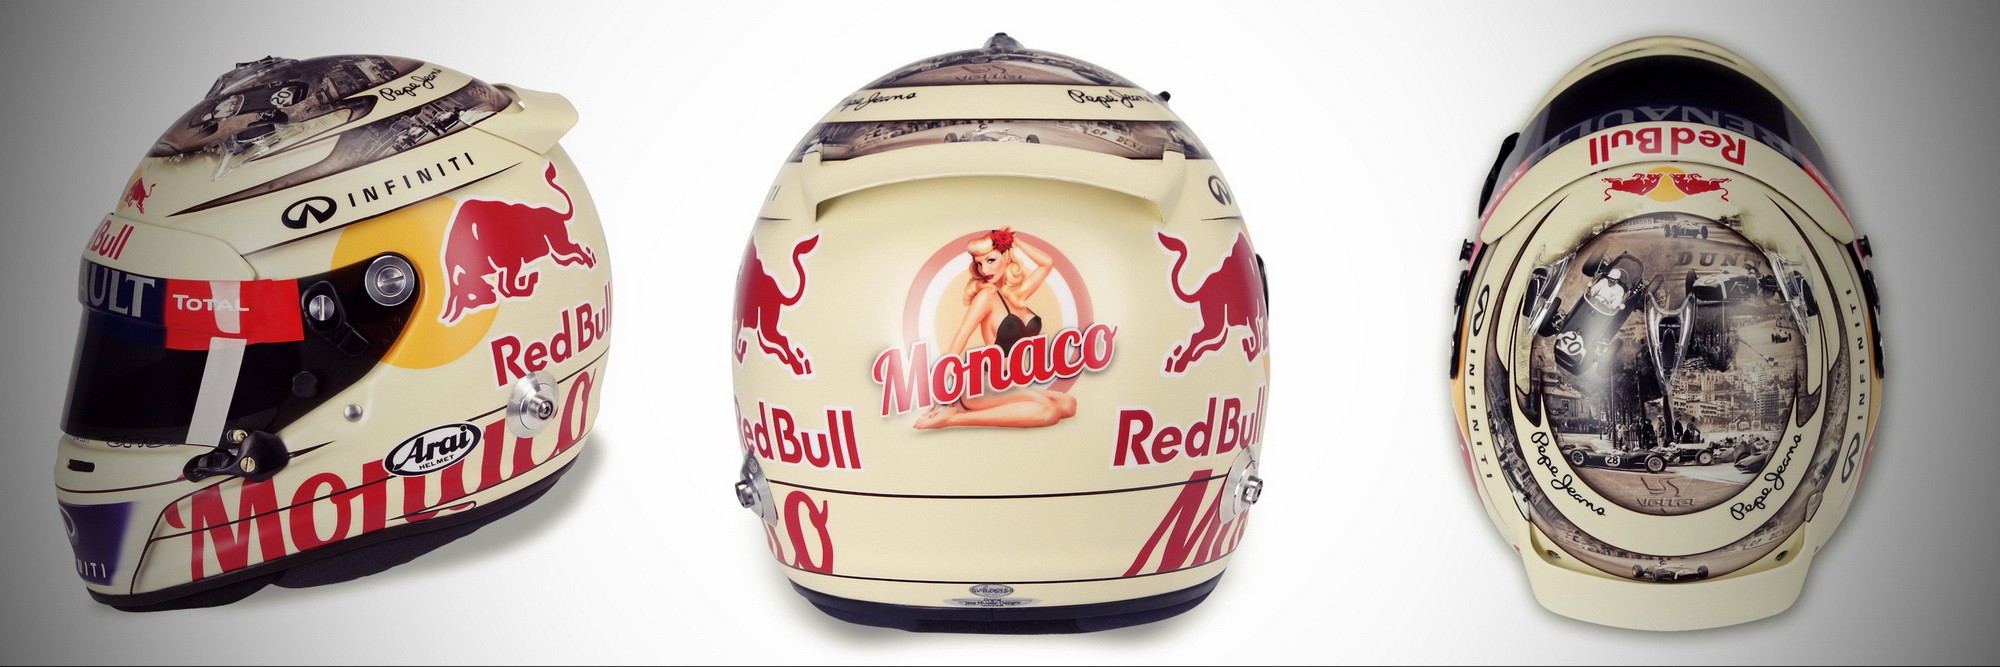 Шлем Себастьяна Феттеля на Гран-При Монако 2013 | 2013 Monaco Grand Prix helmet of Sebastian Vettel